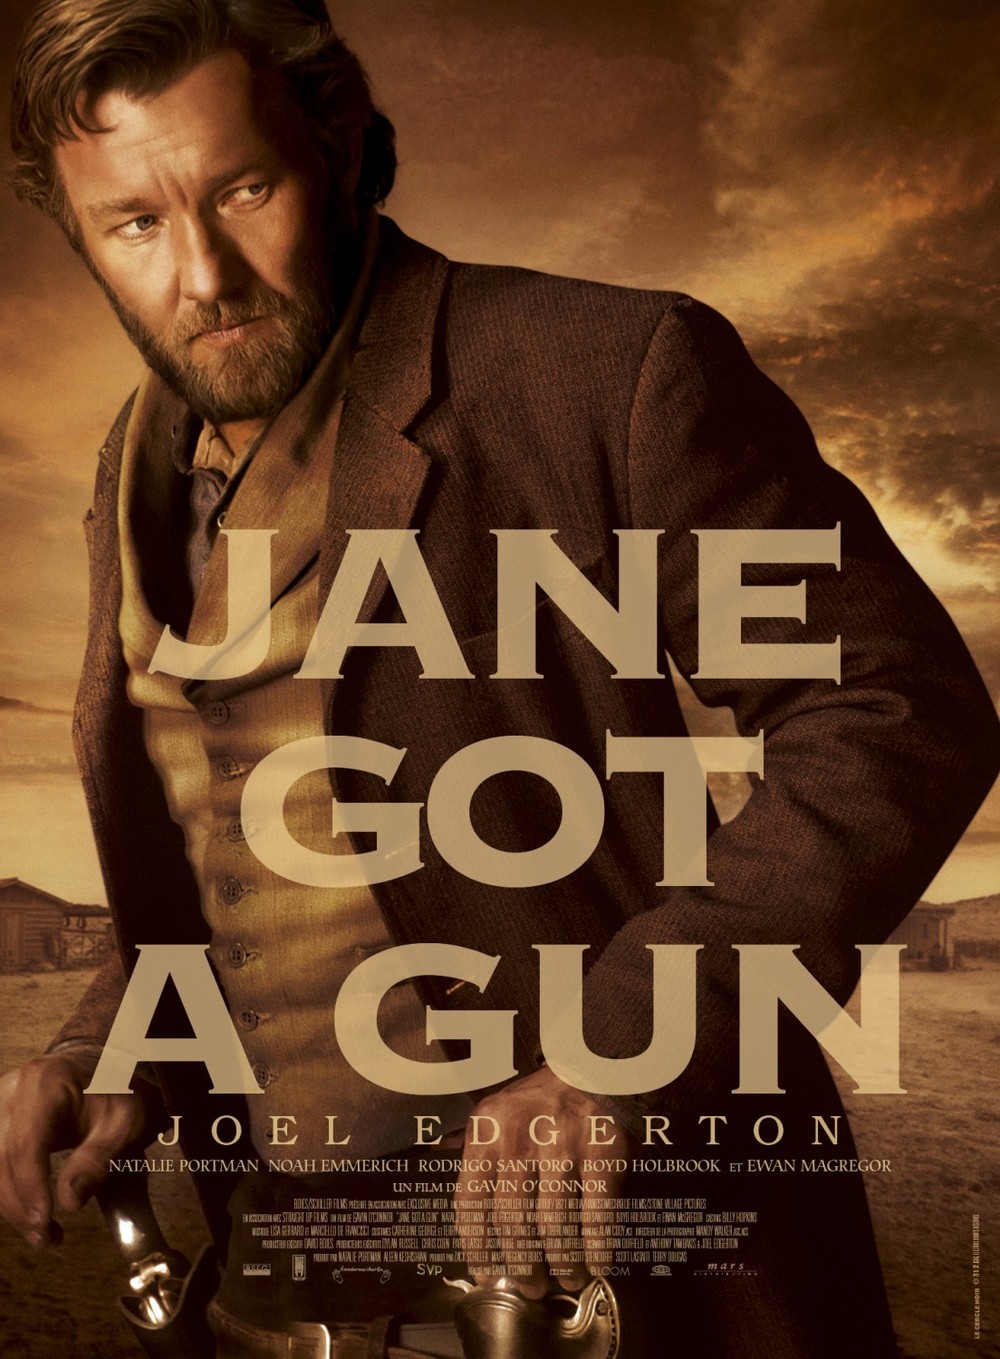 gun jane got edgerton joel poster posters trailer portman natalie movies dvd ewan mcgregor western boyd release date synopsis woman